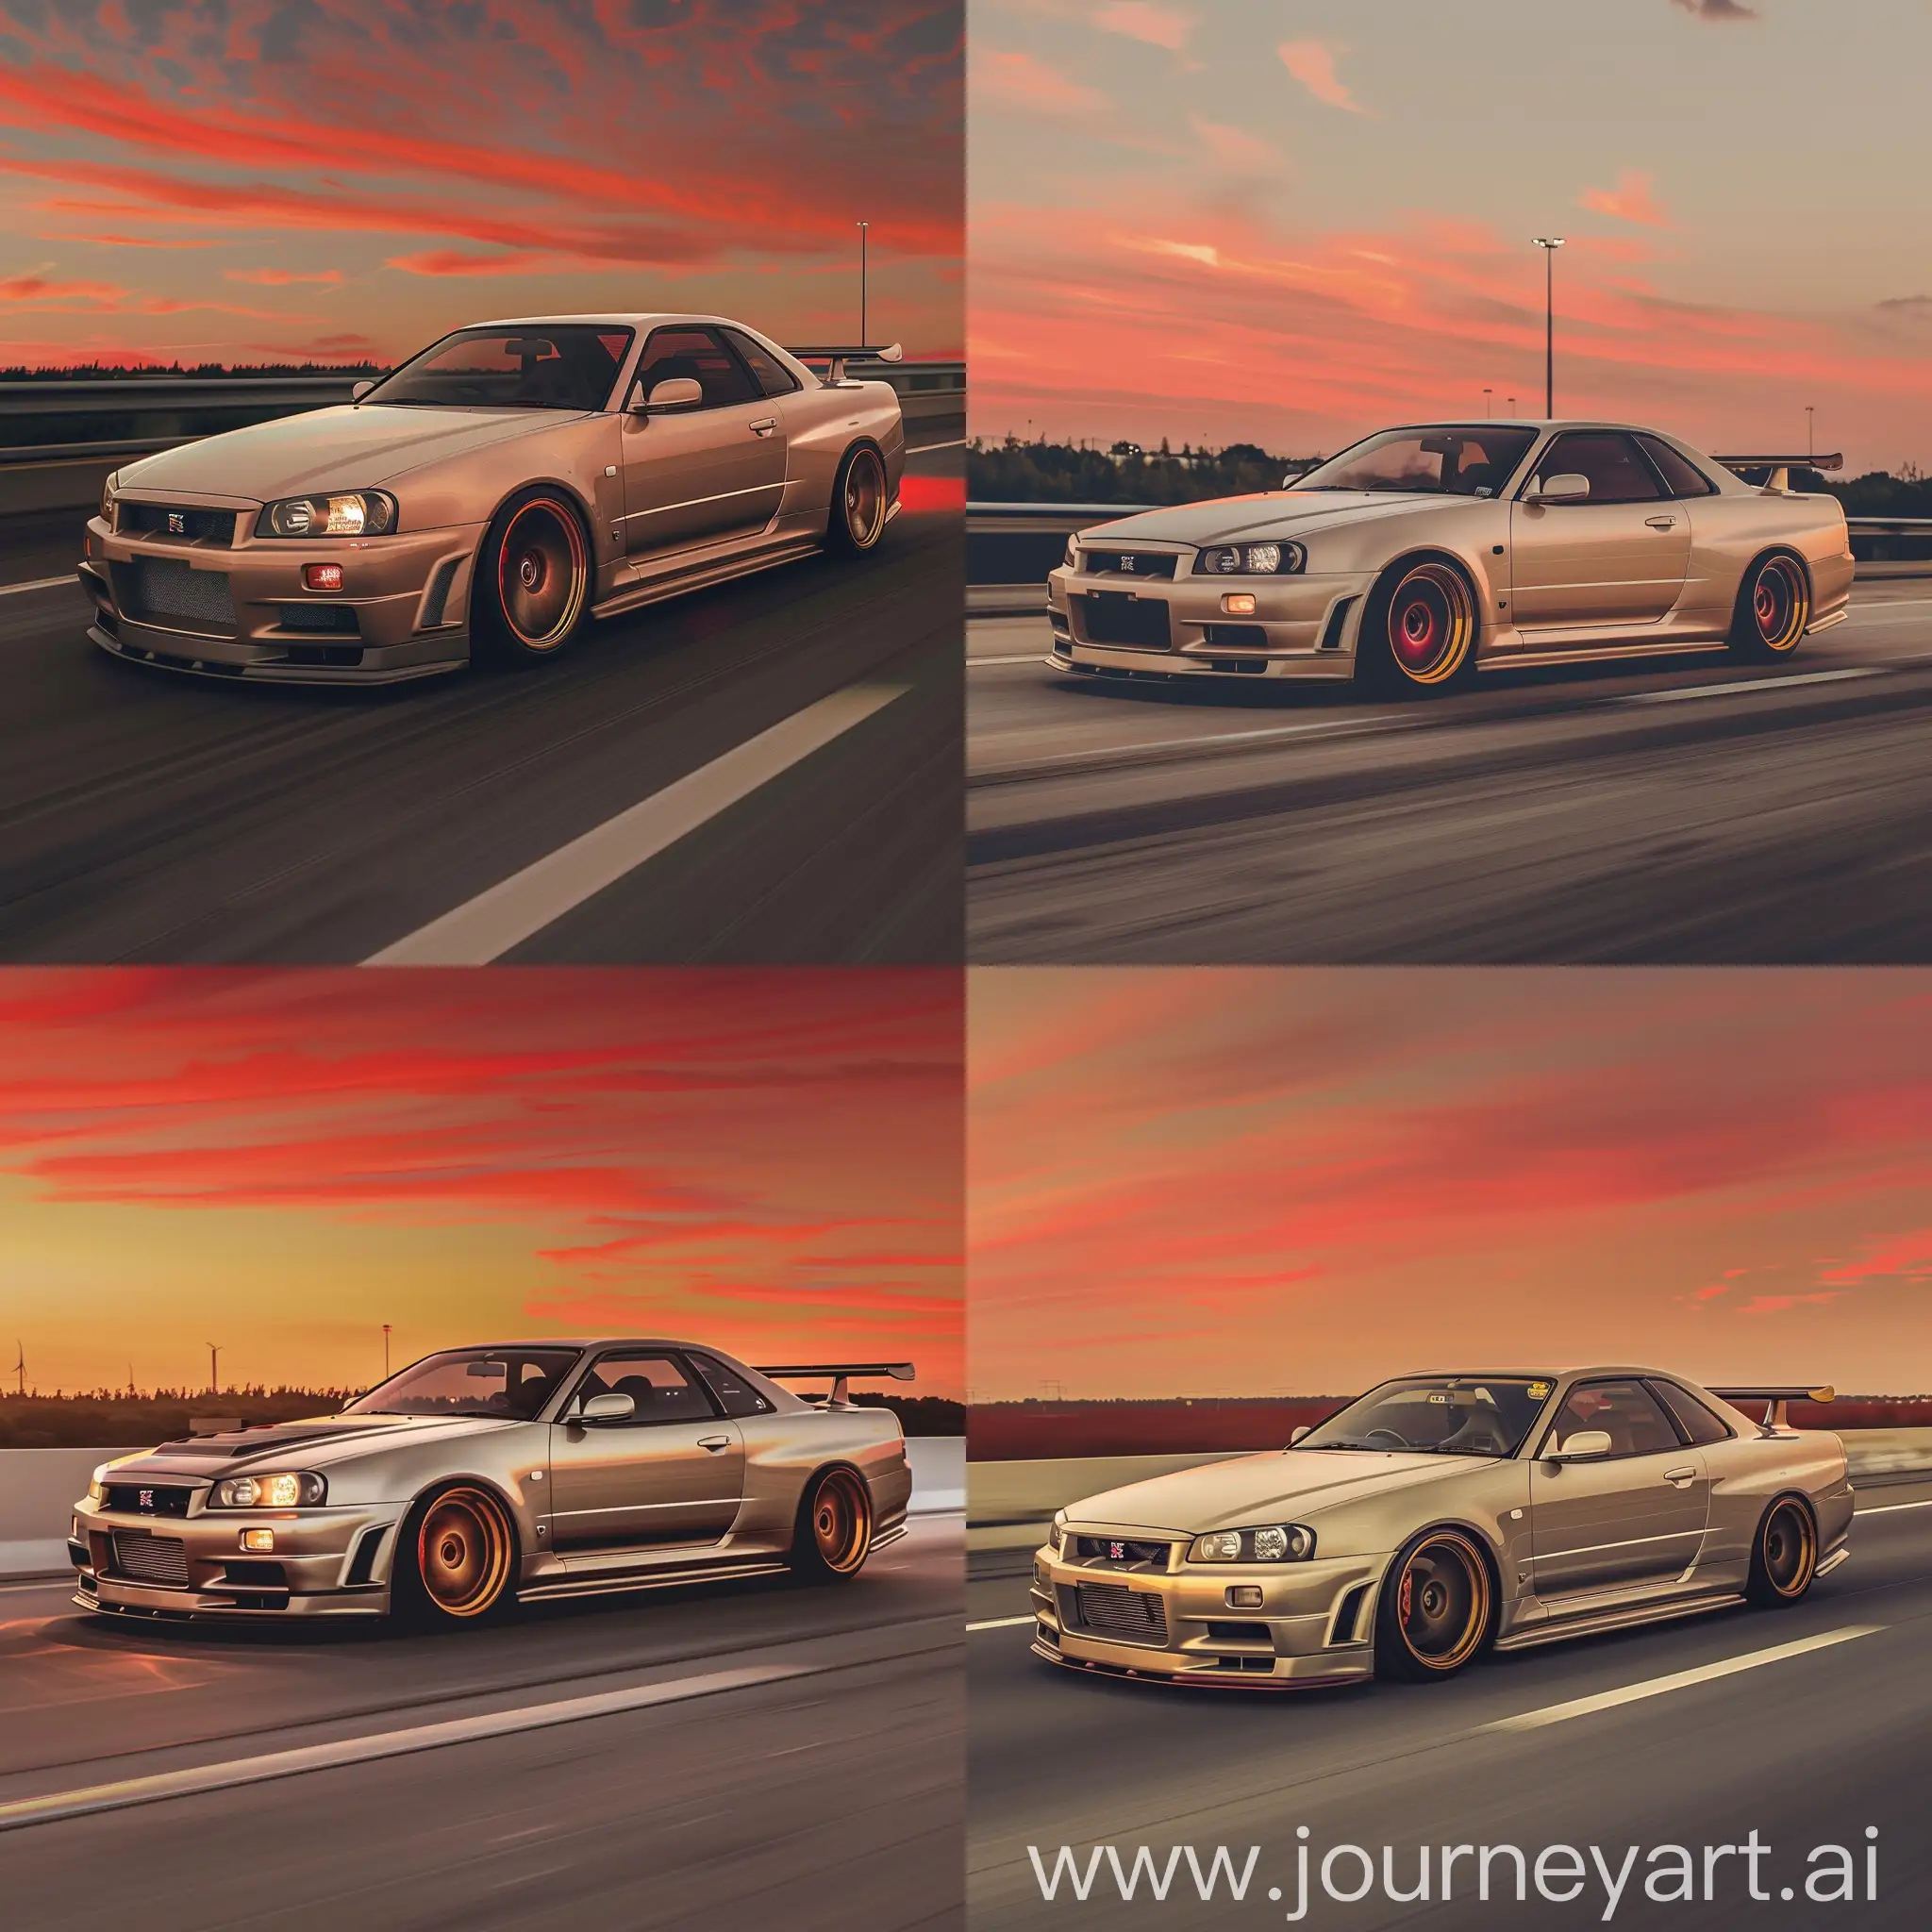 Beige-Nissan-R34-Skyline-Driving-on-Highway-with-Golden-Rims-under-Orange-Red-Sky